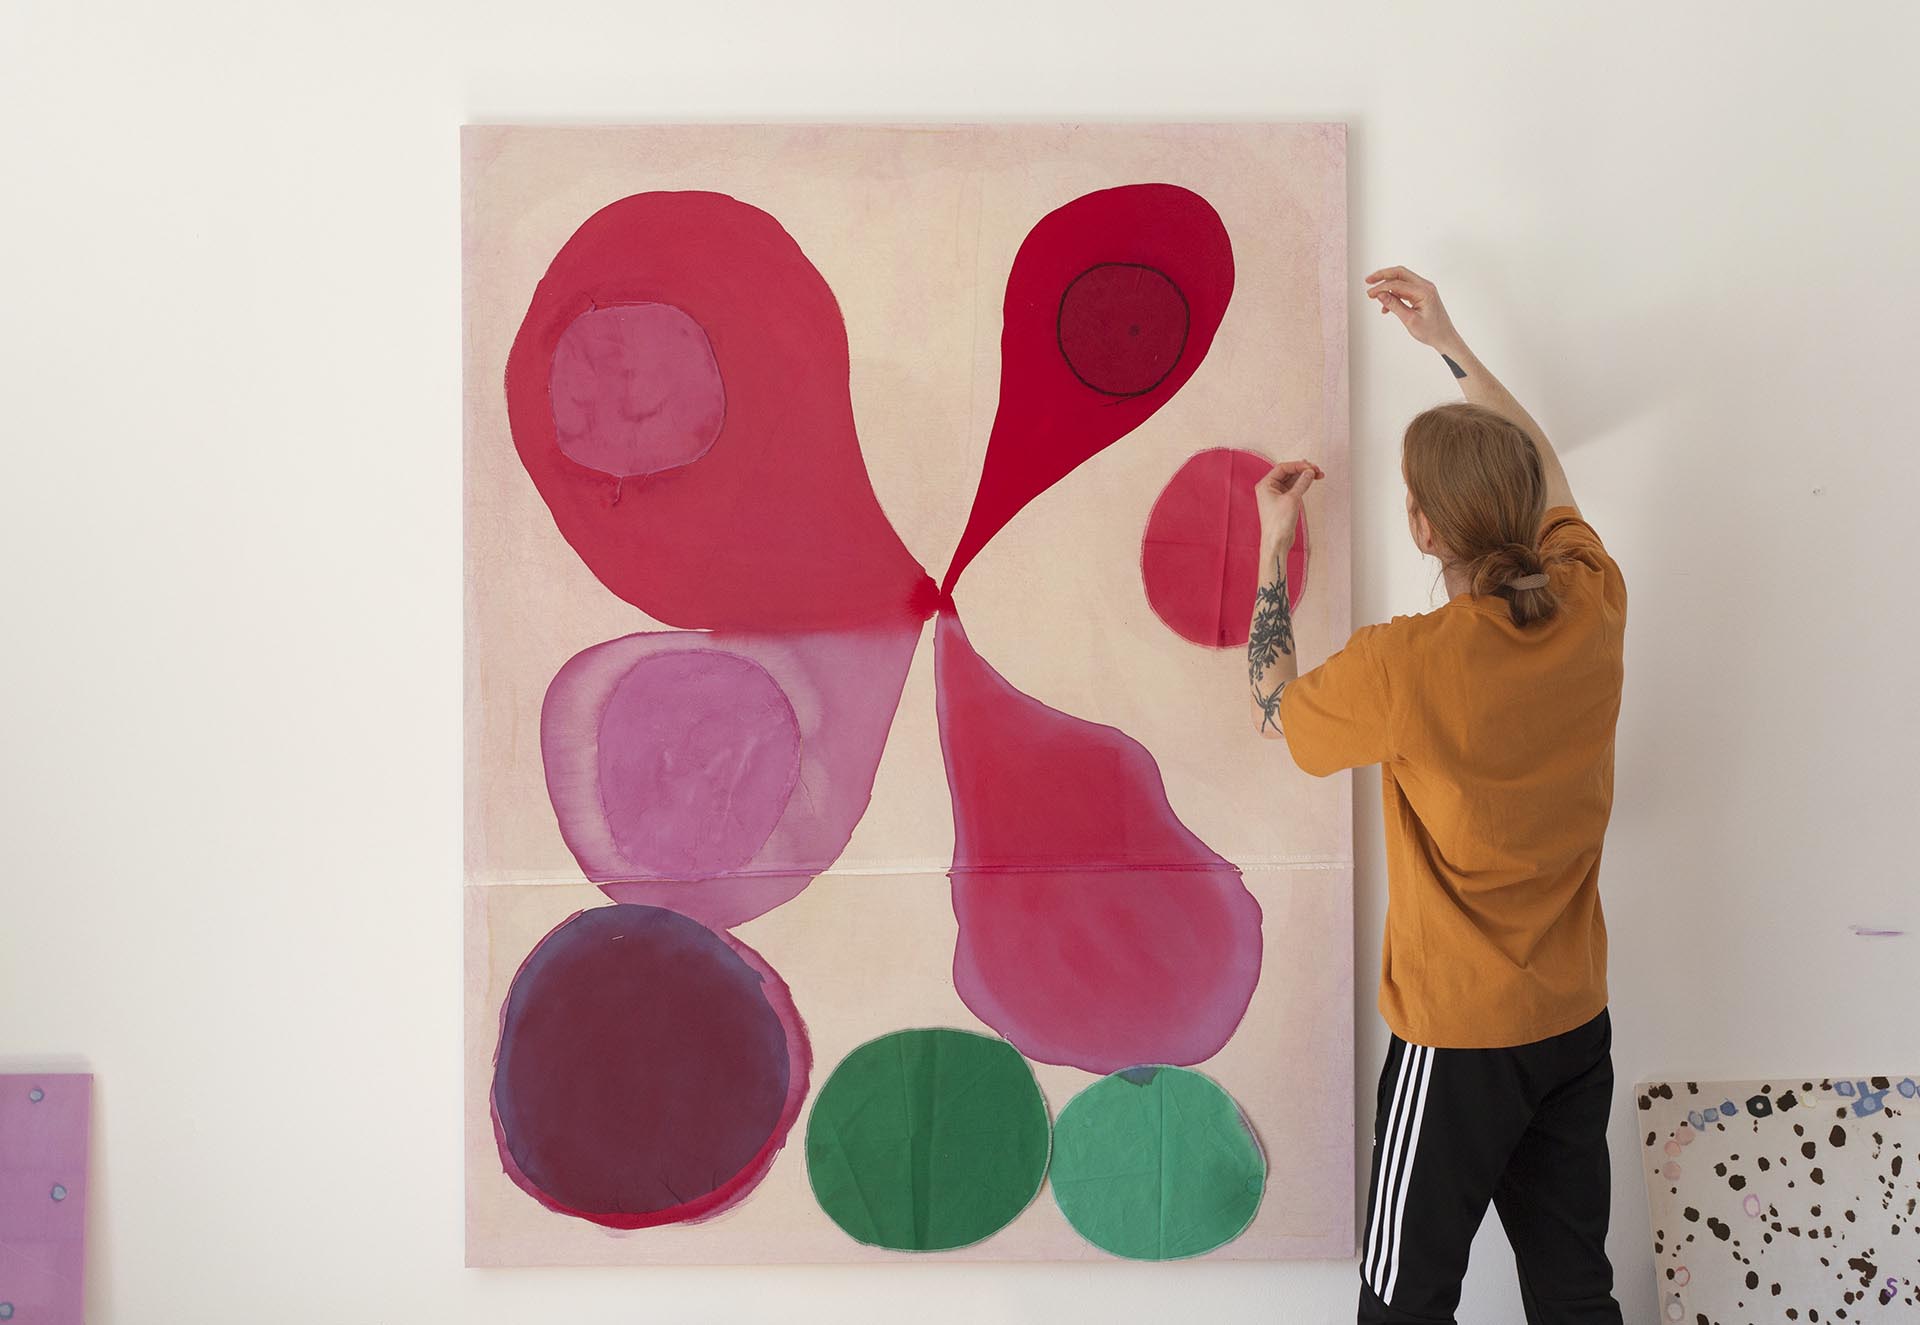  Cody Tumblin, Hopper Prize Finalist at work in his Chicago studio&nbsp; 